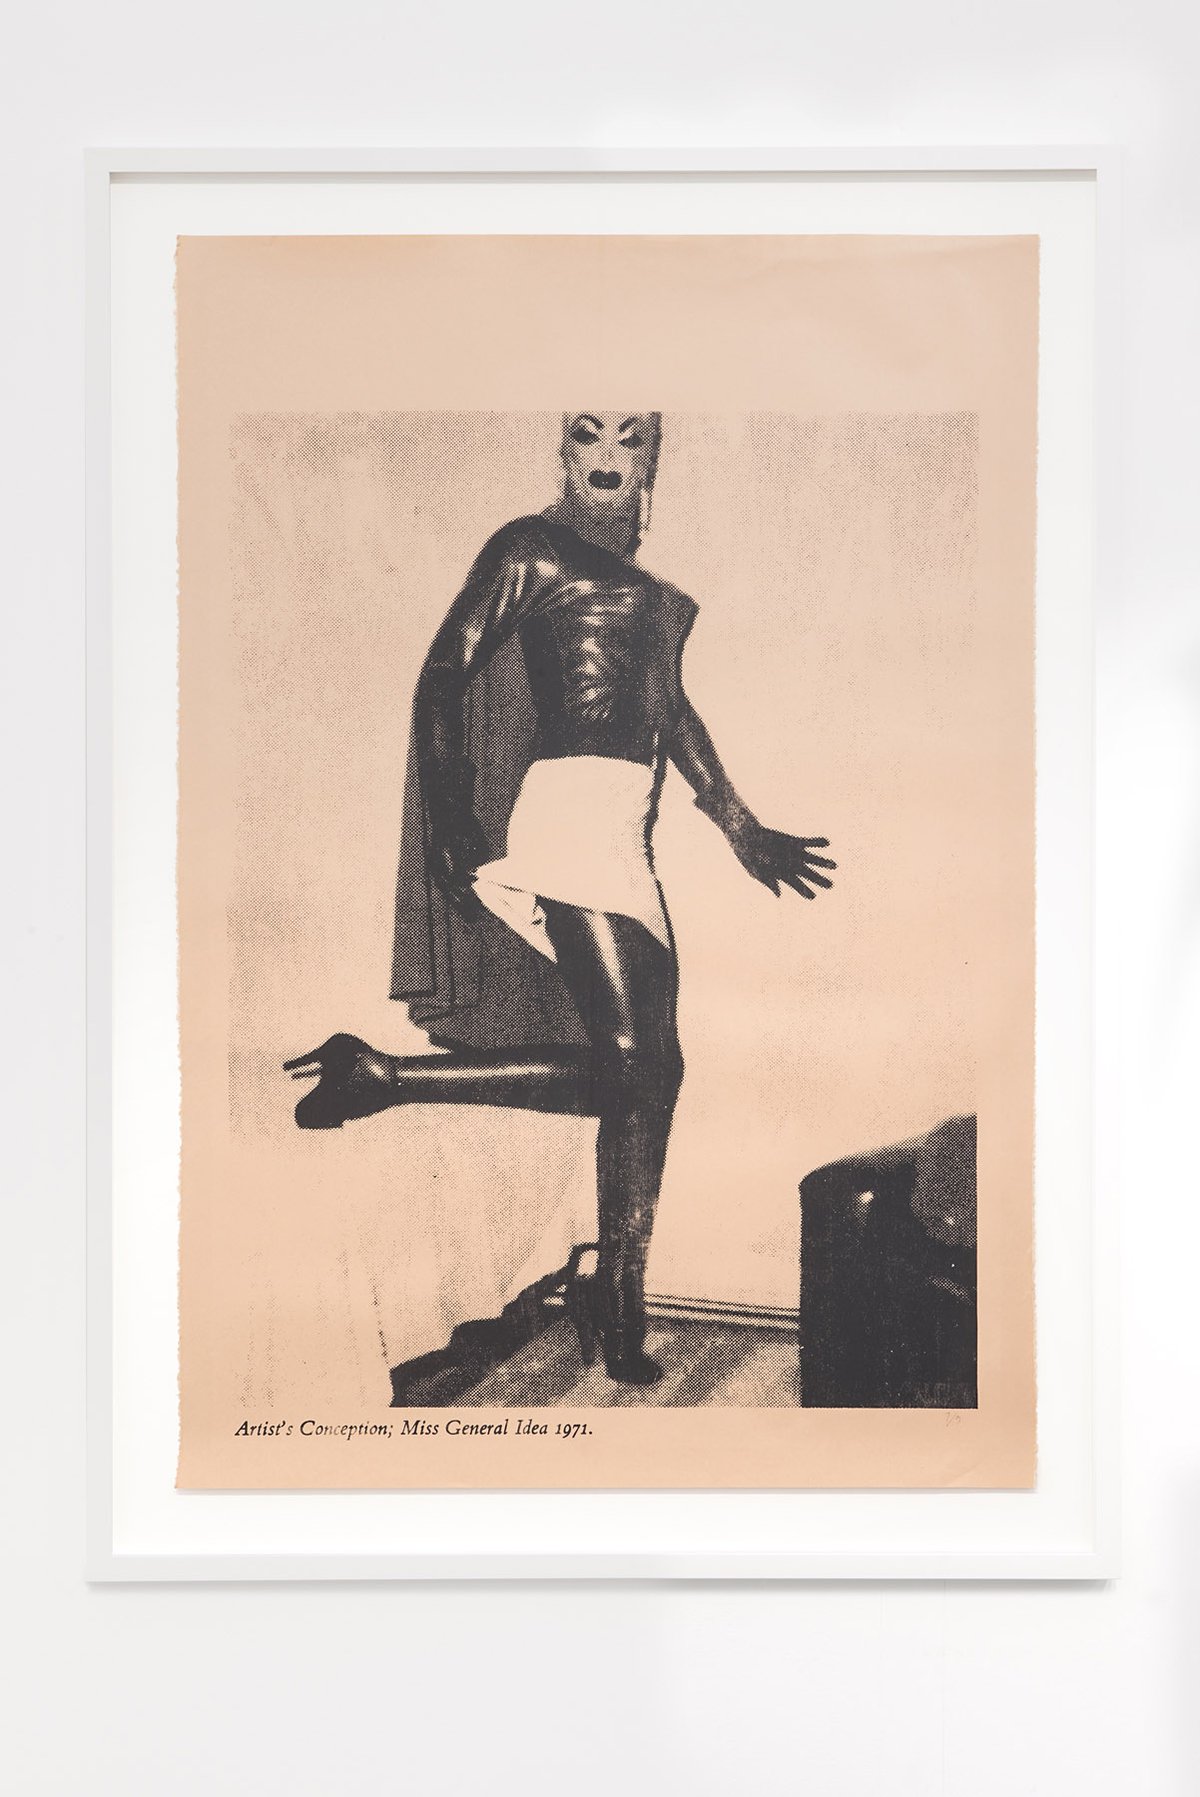 General IdeaArtist’s Conception: Miss General Idea 1971, 1971Silkscreen on salmon wove paper101.5 x 66 cm